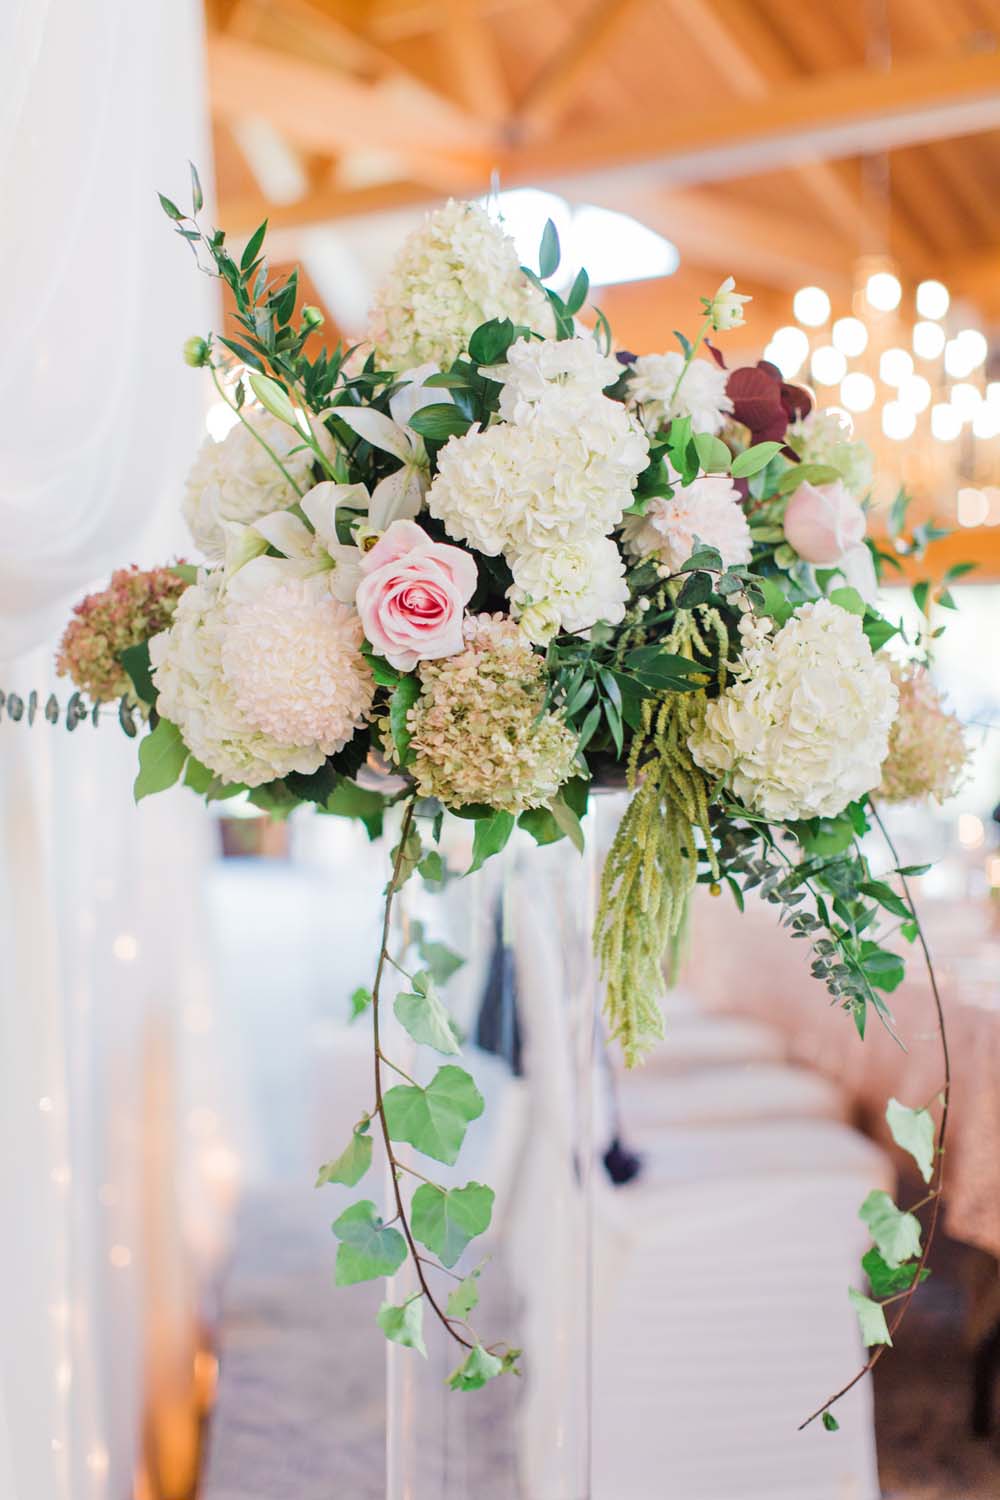 A Rustic, Whimsical Wedding in Tottenham - Flowers